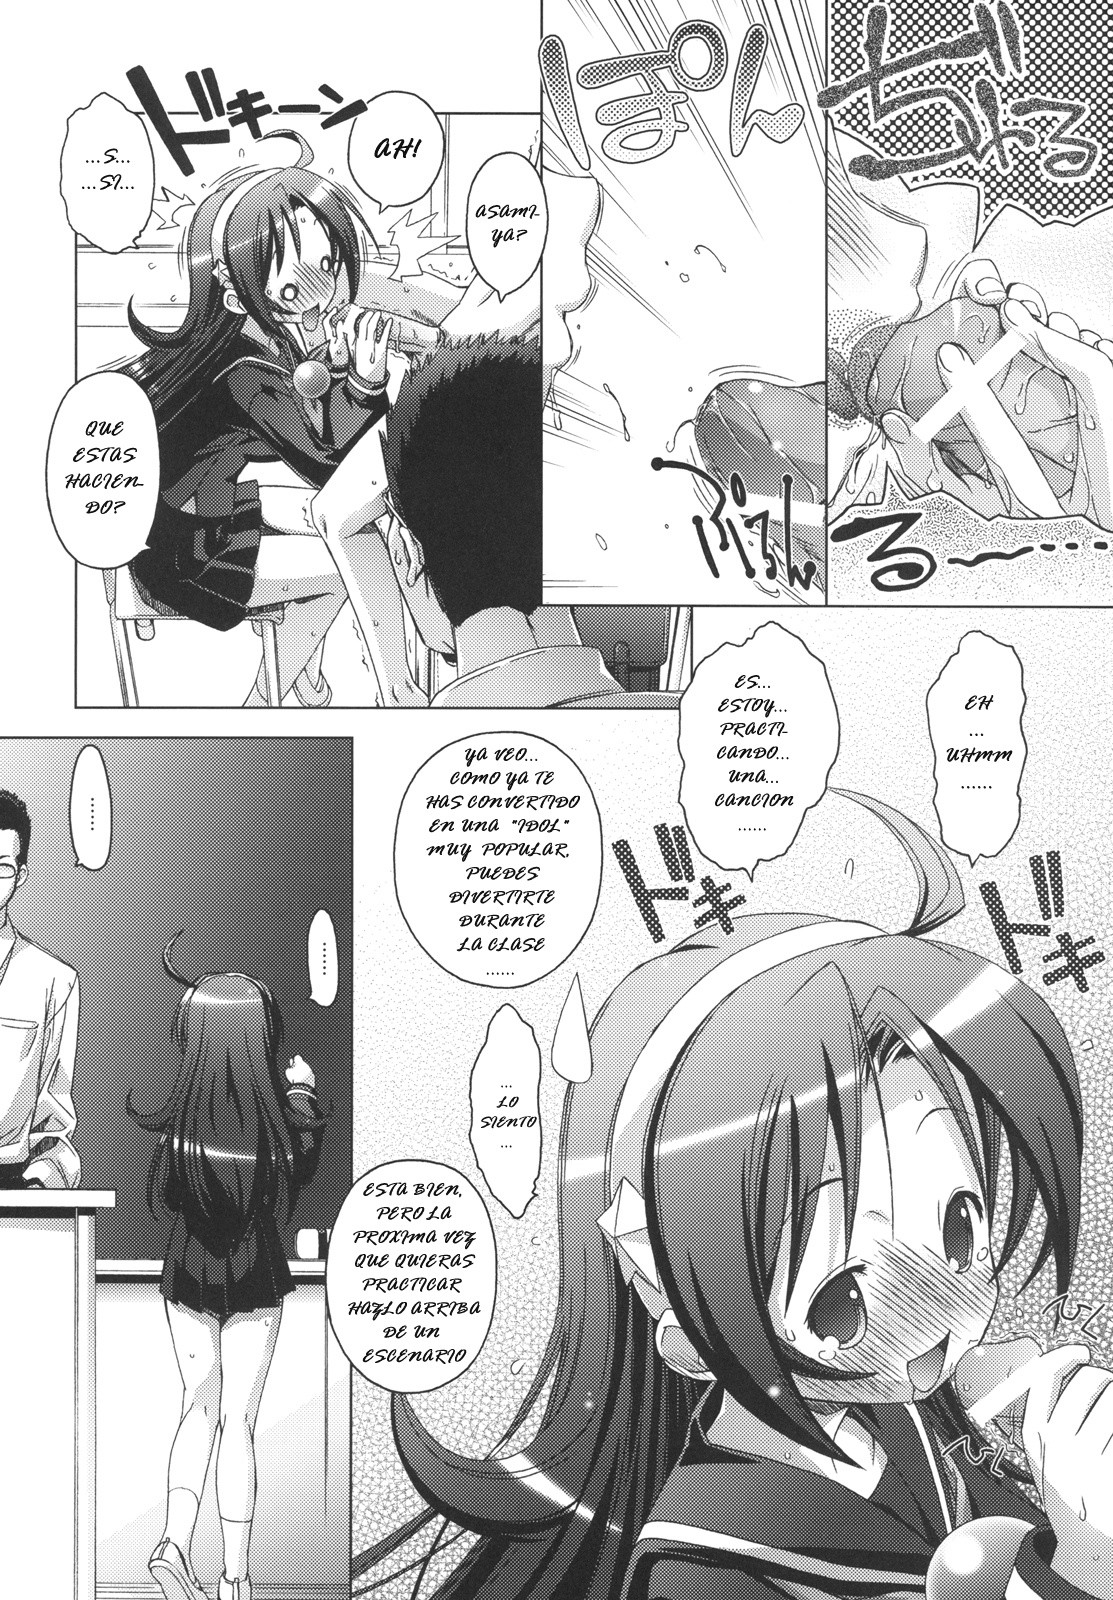 Psycho Soldier Athena 2 seek hentai manga picture 10